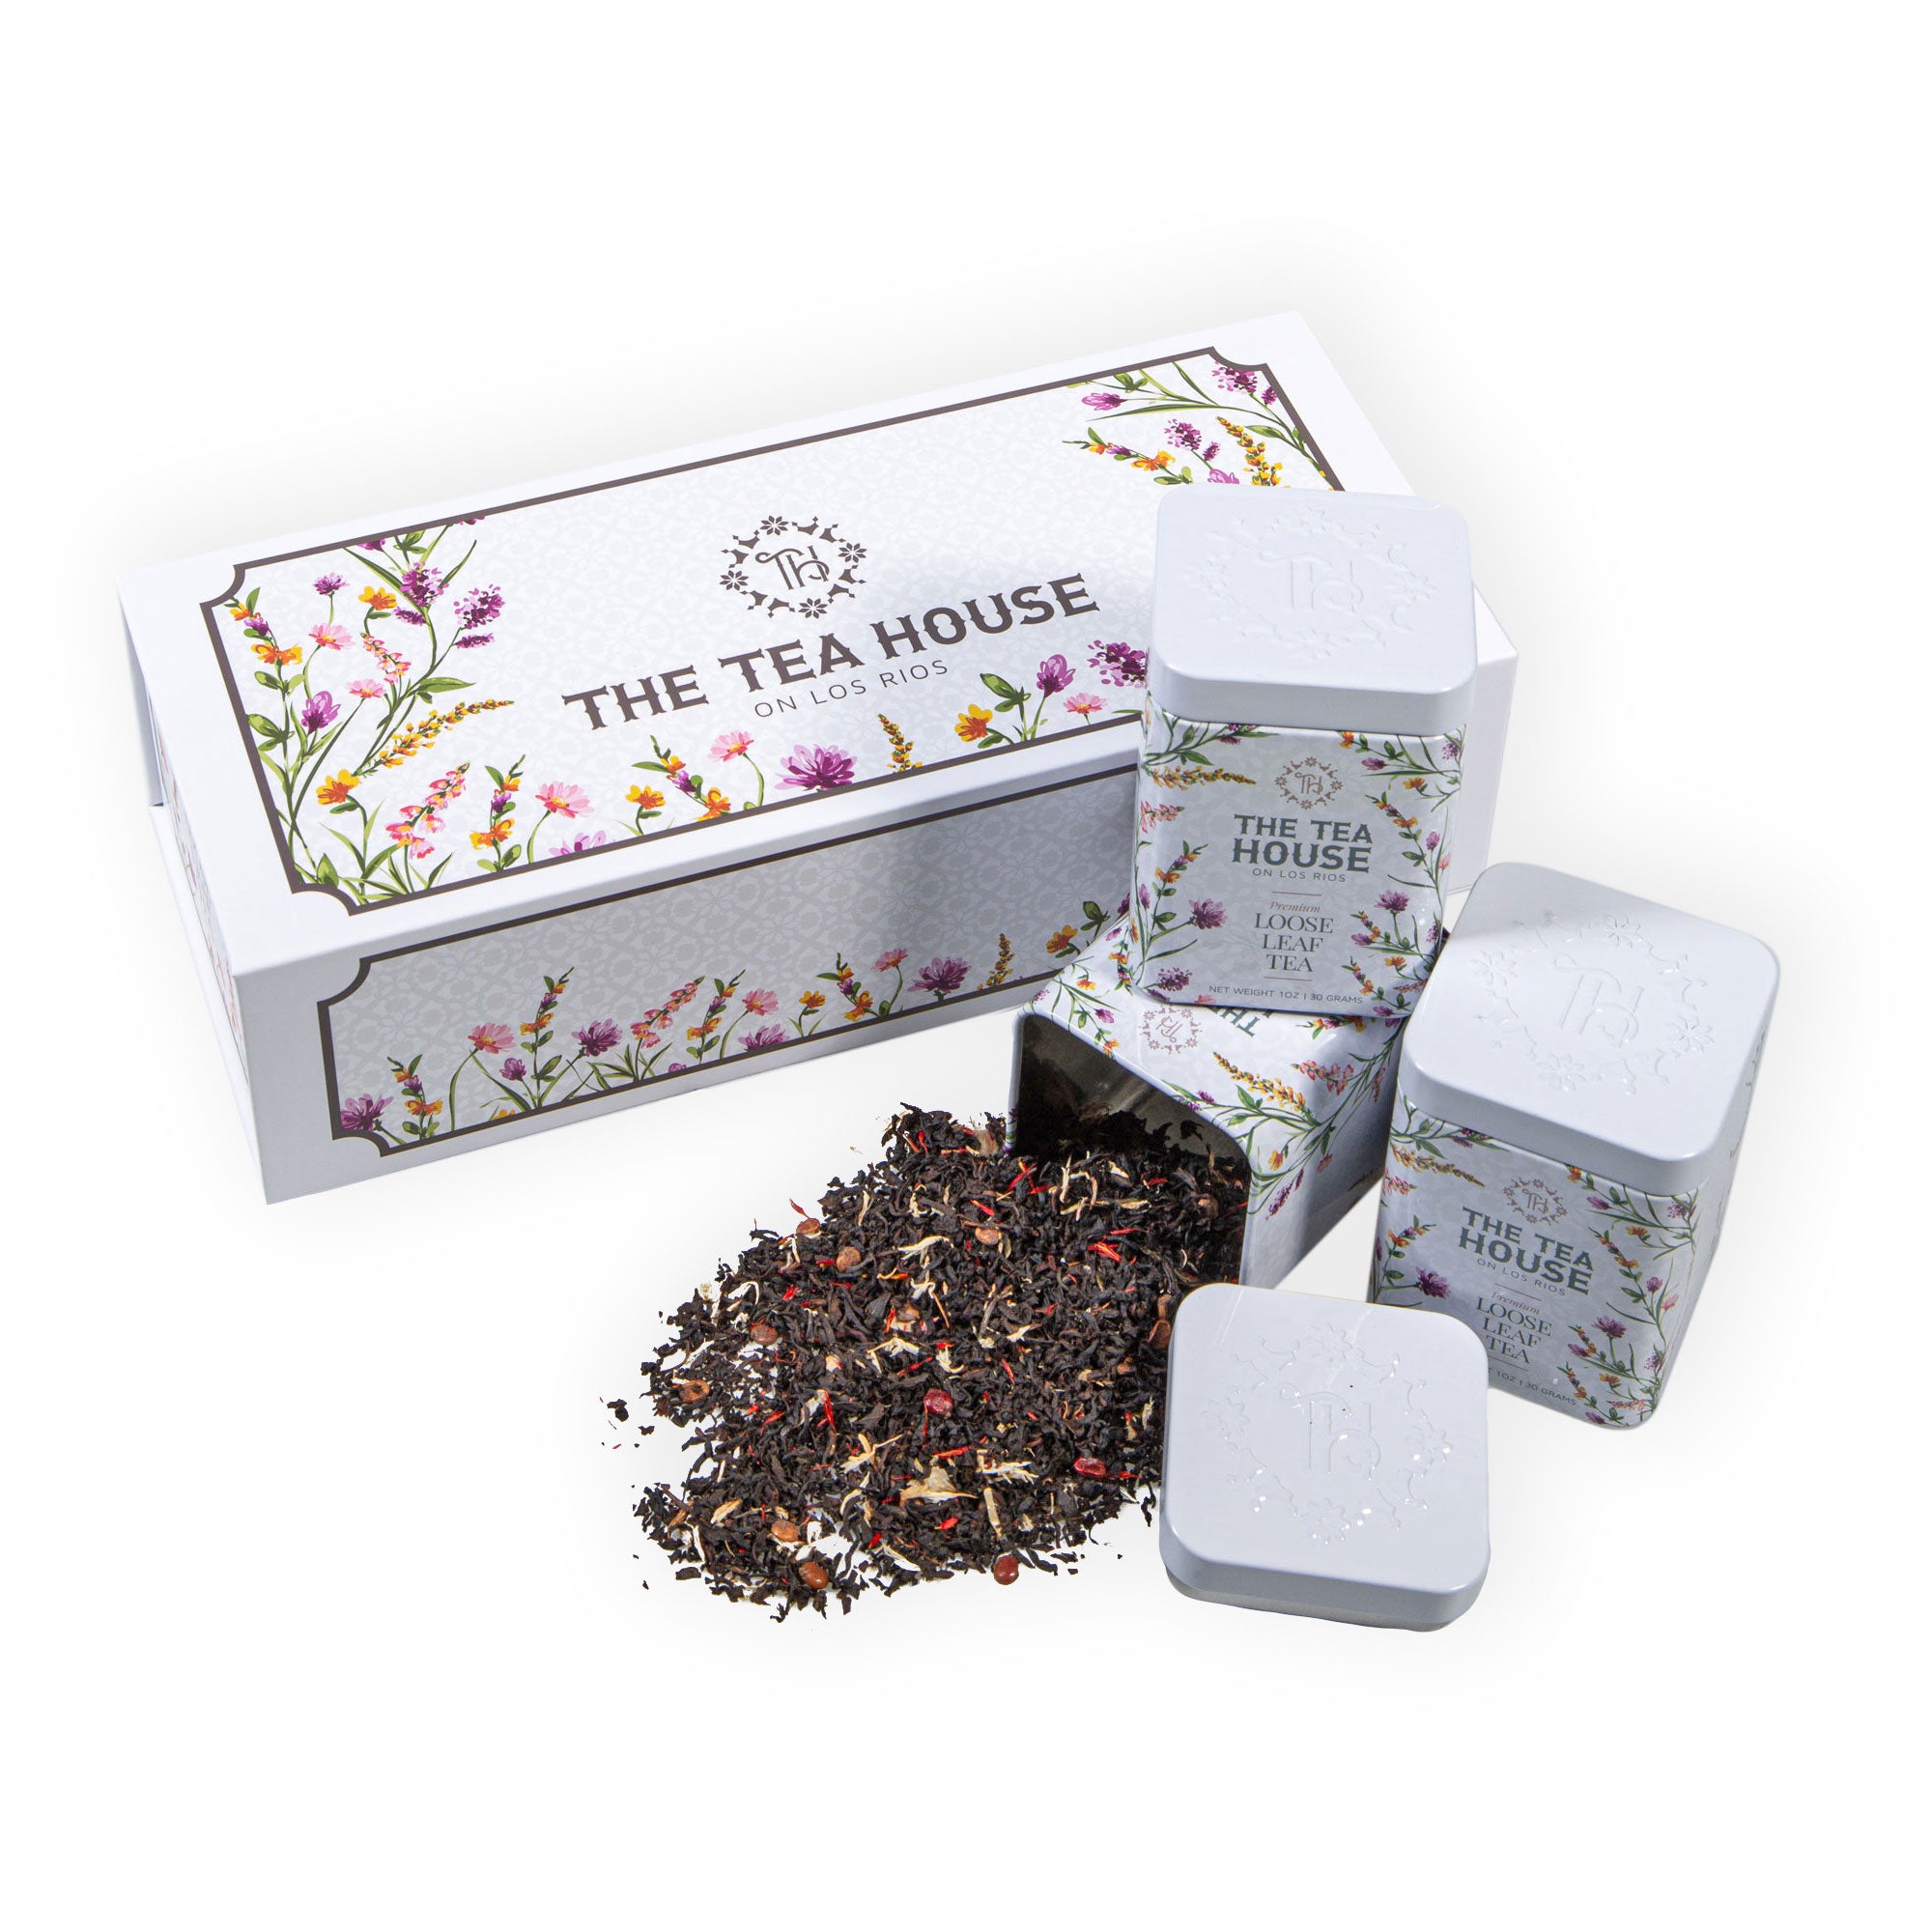 The Tea House Gift Box